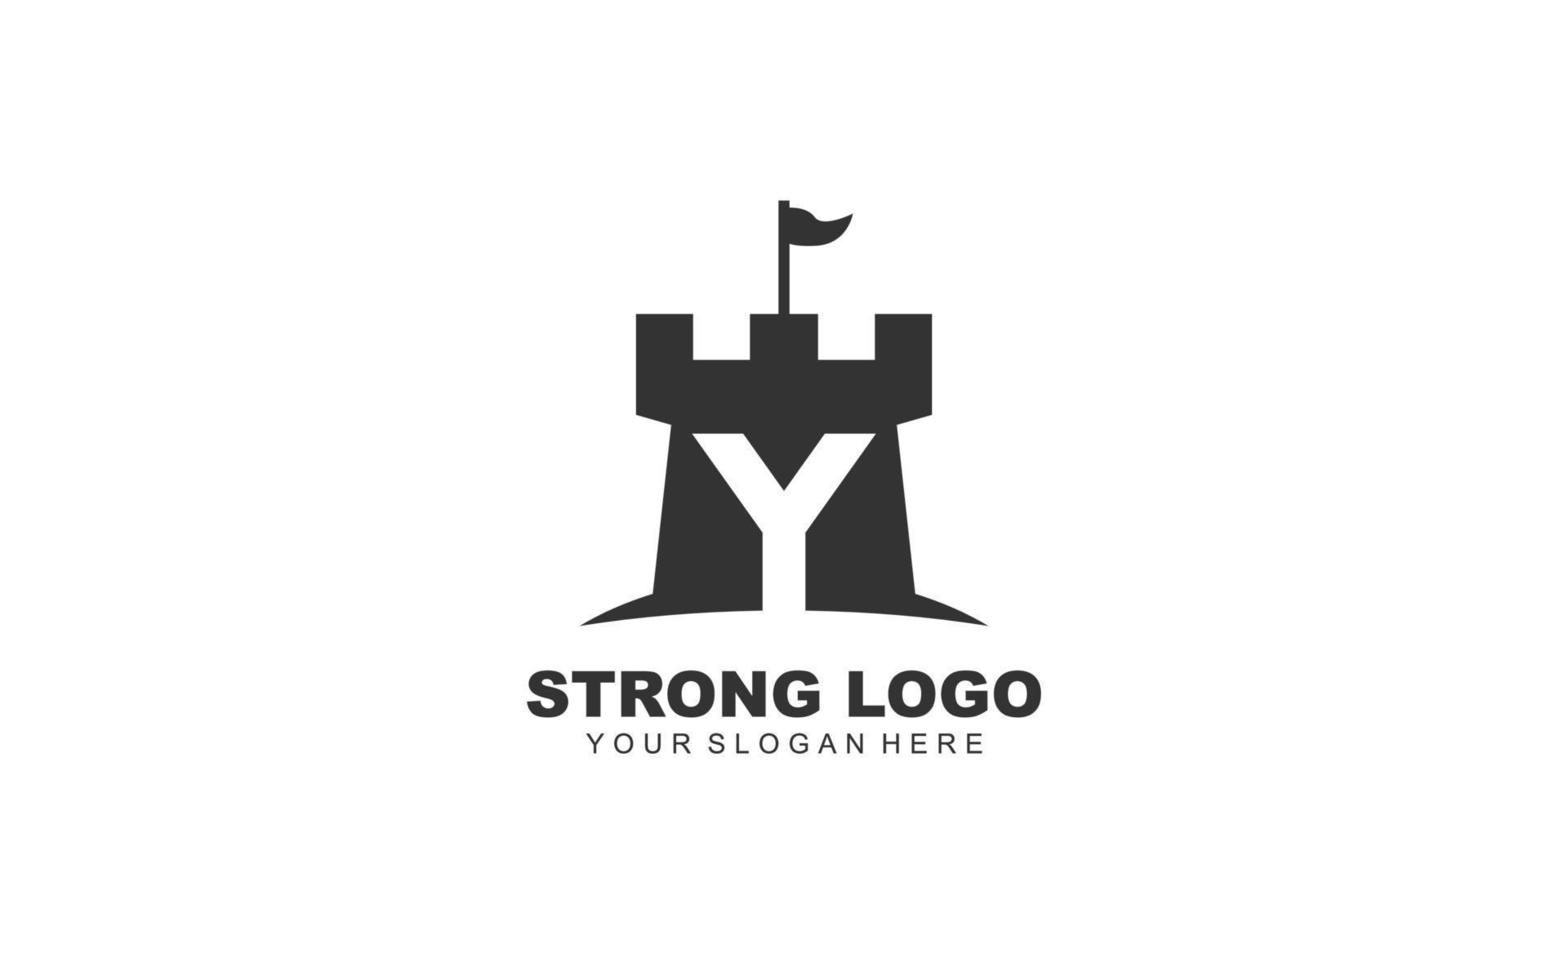 Y FORTRESS logo design inspiration. Vector letter template design for brand.